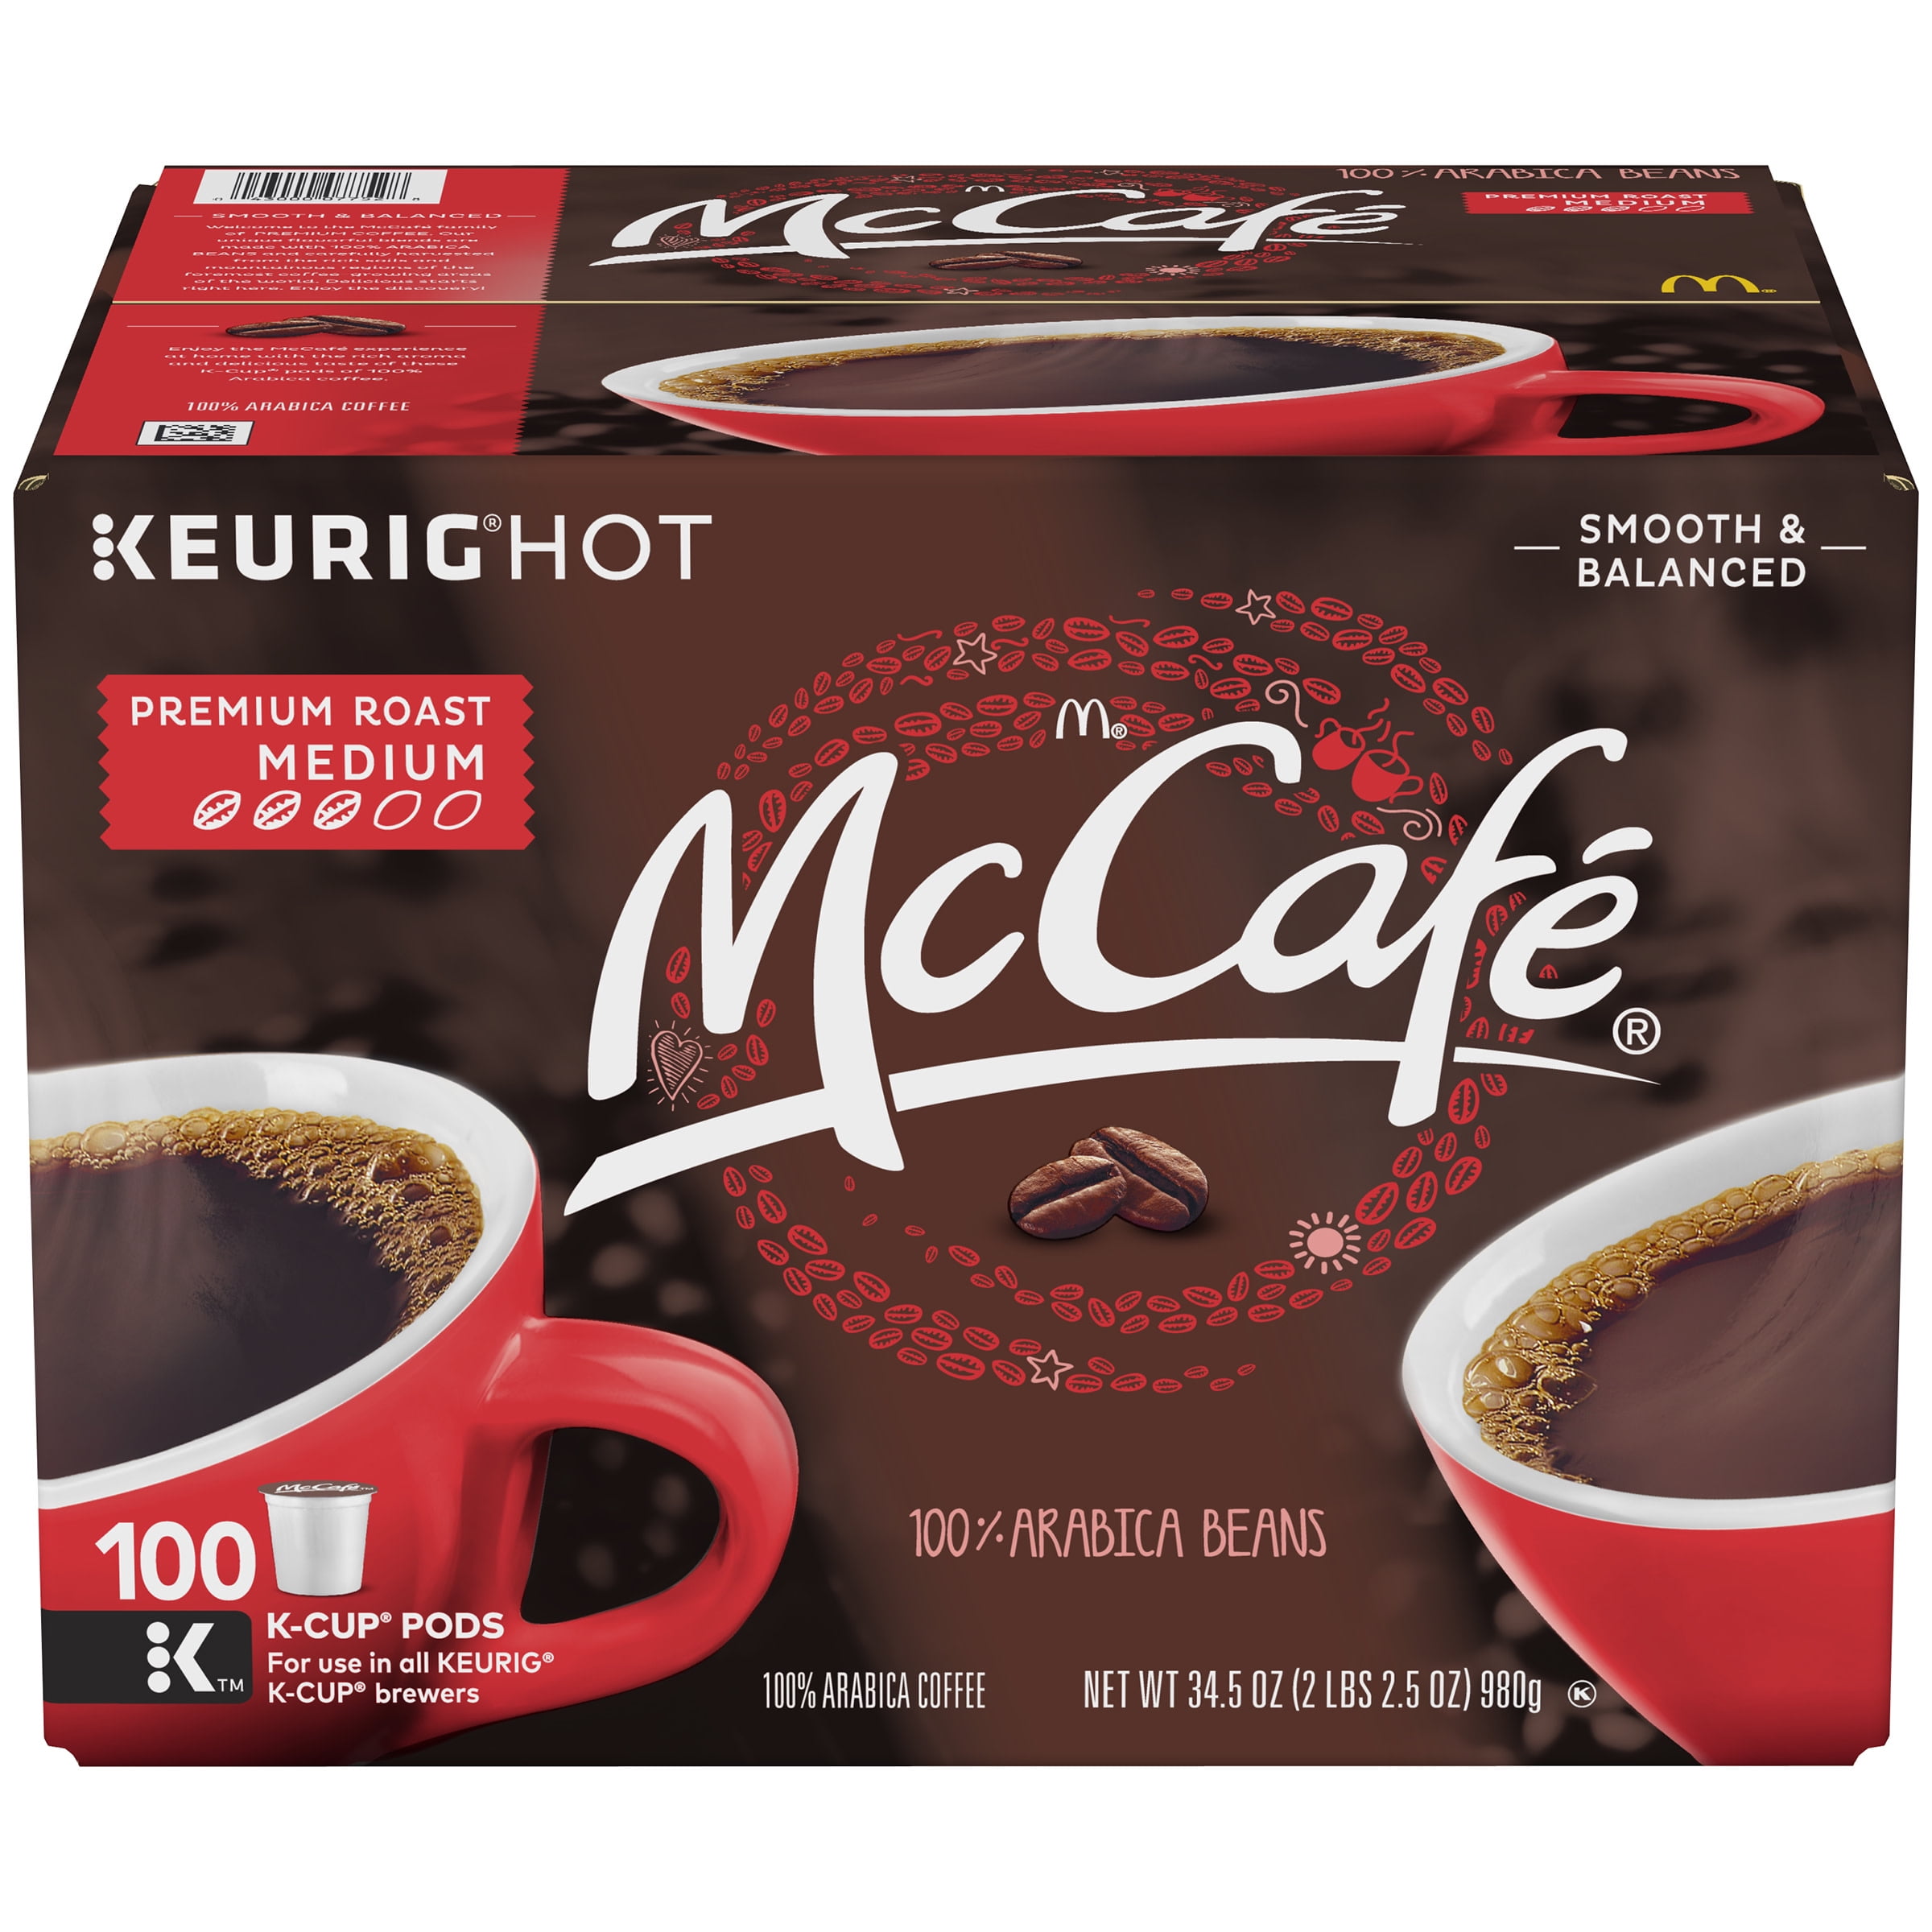 McCafe Premium Roast Coffee, Single Serve Keurig K-Cup Pods